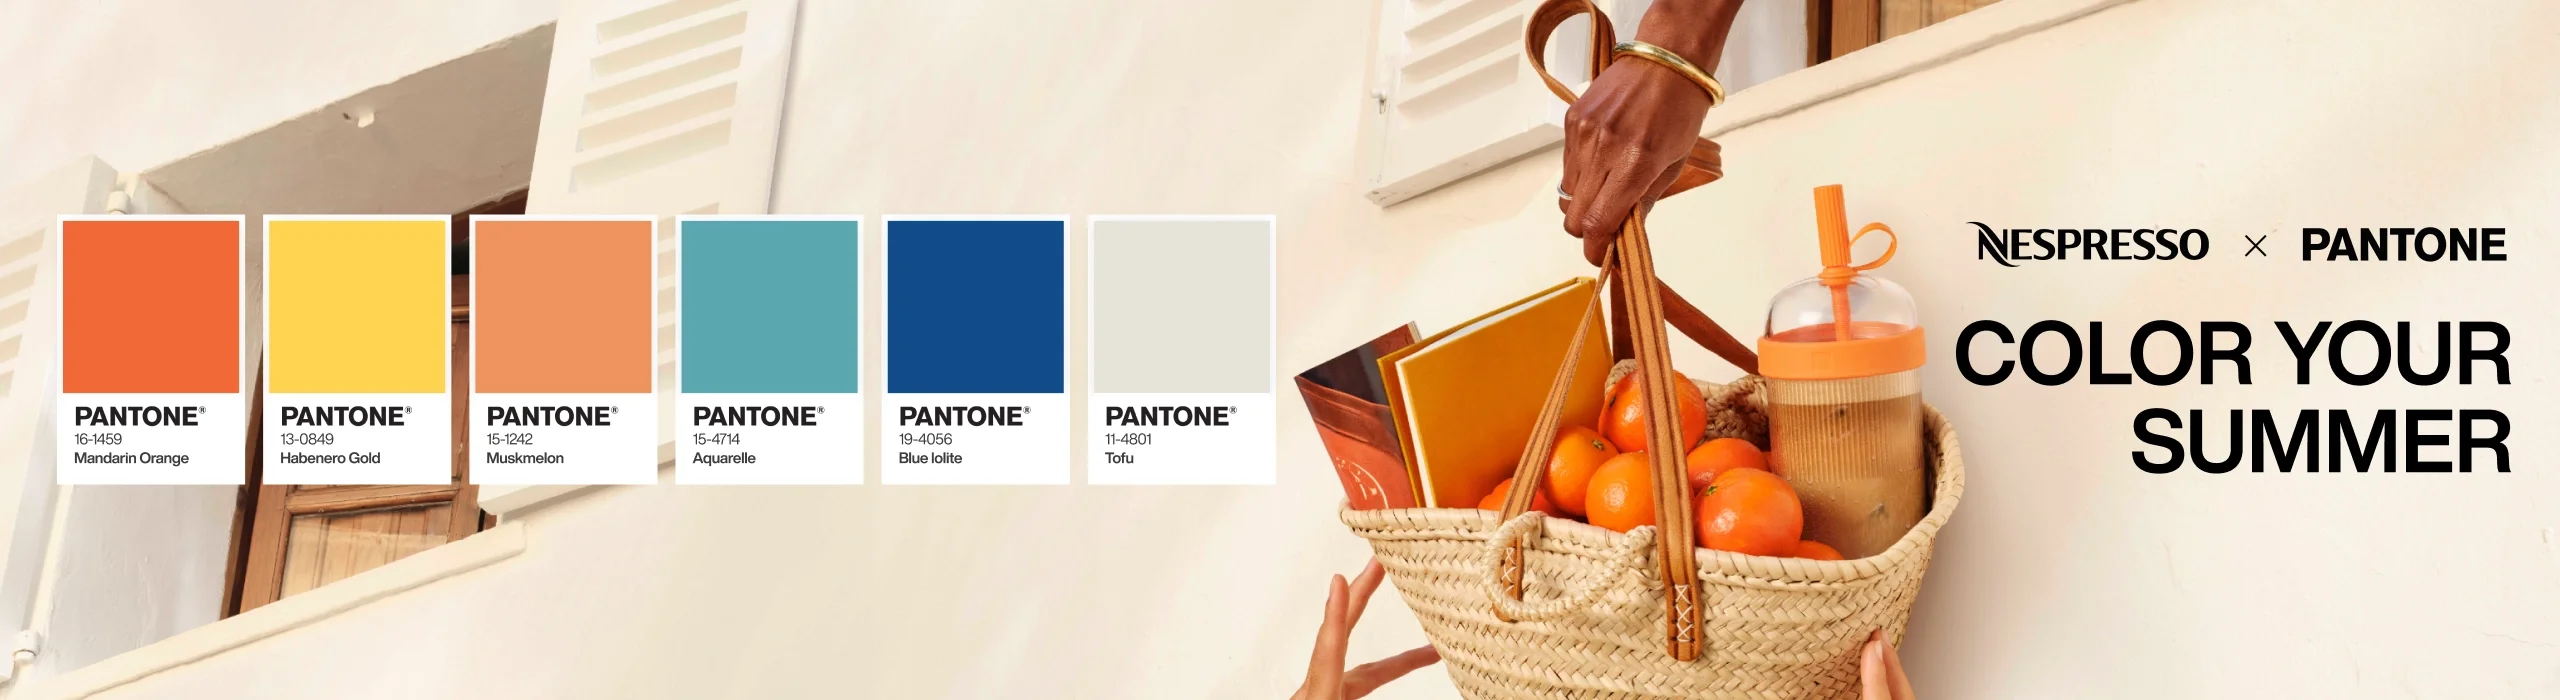 Blog01 Pantone-Nespresso color-your-summer-hero Desktop Banner 2560 × 700